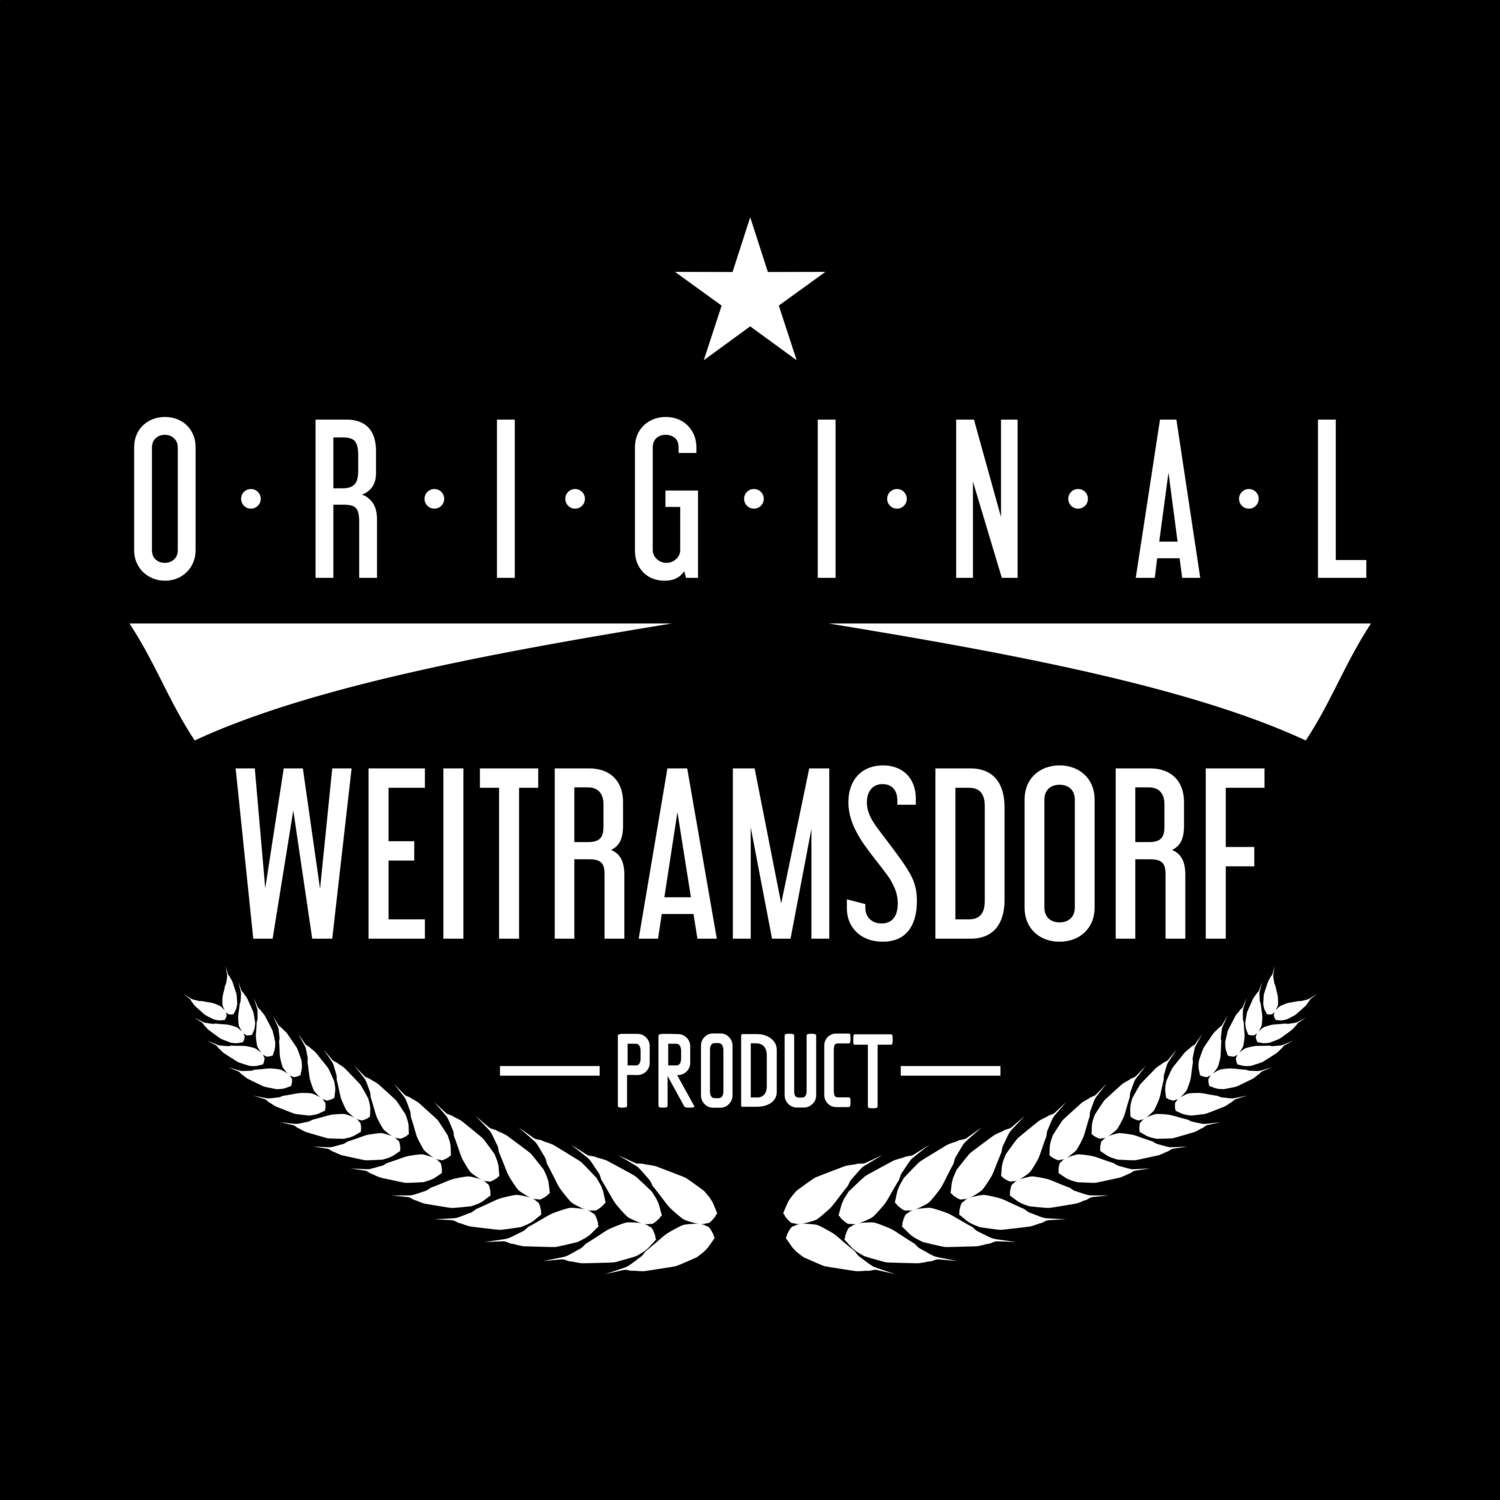 Weitramsdorf T-Shirt »Original Product«